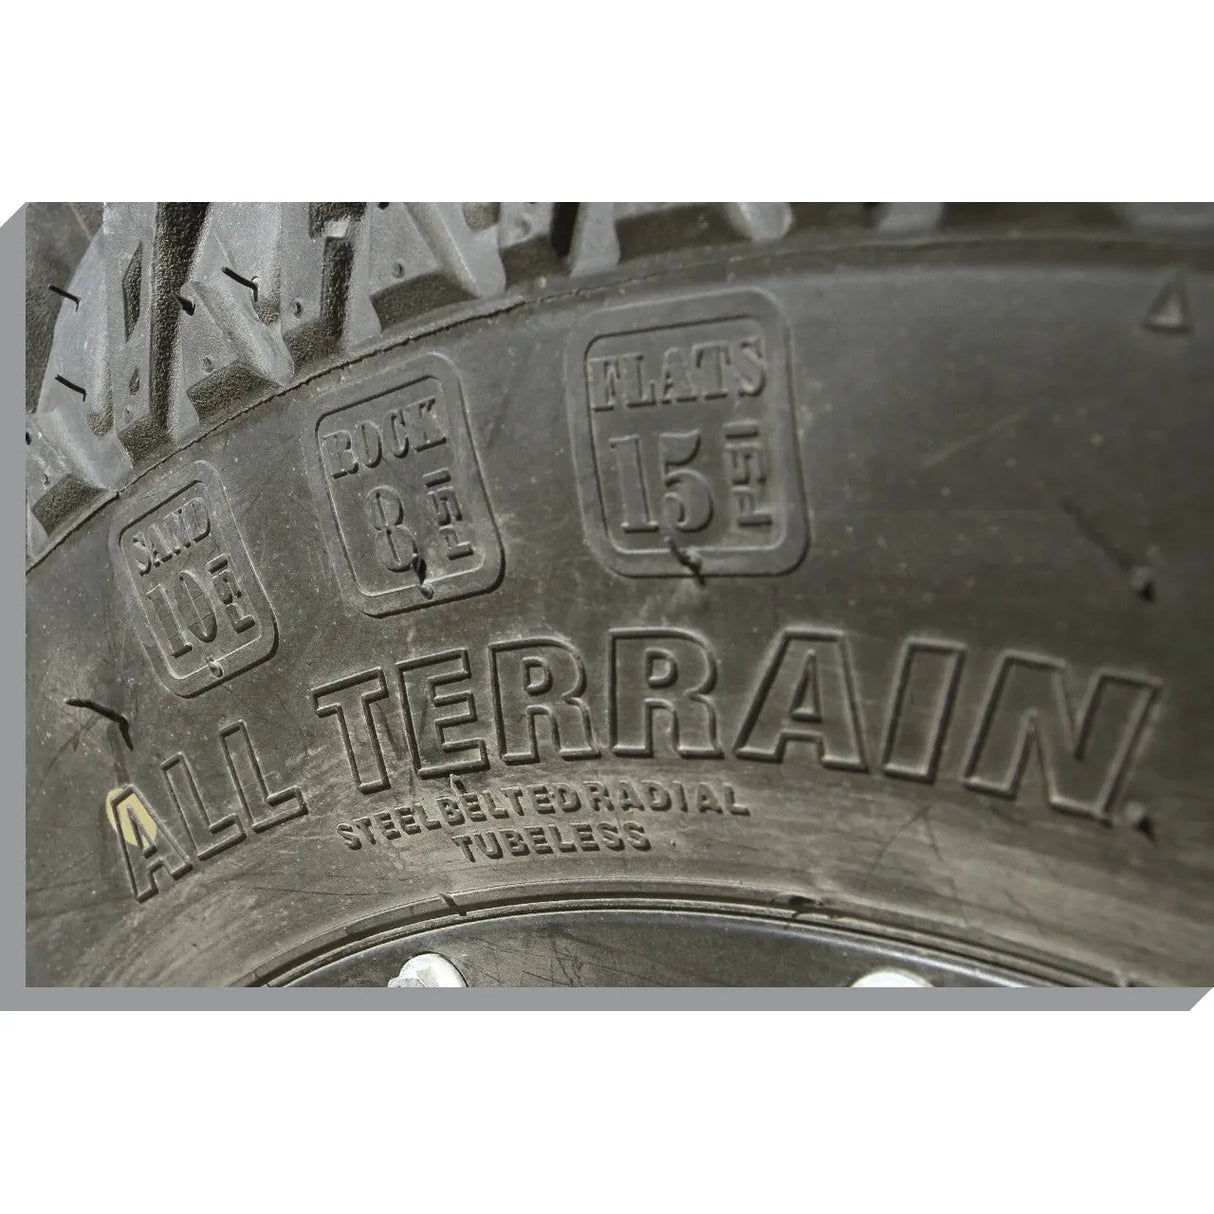 Tensor Tire Regulator All Terrain Tire - 32x10R15